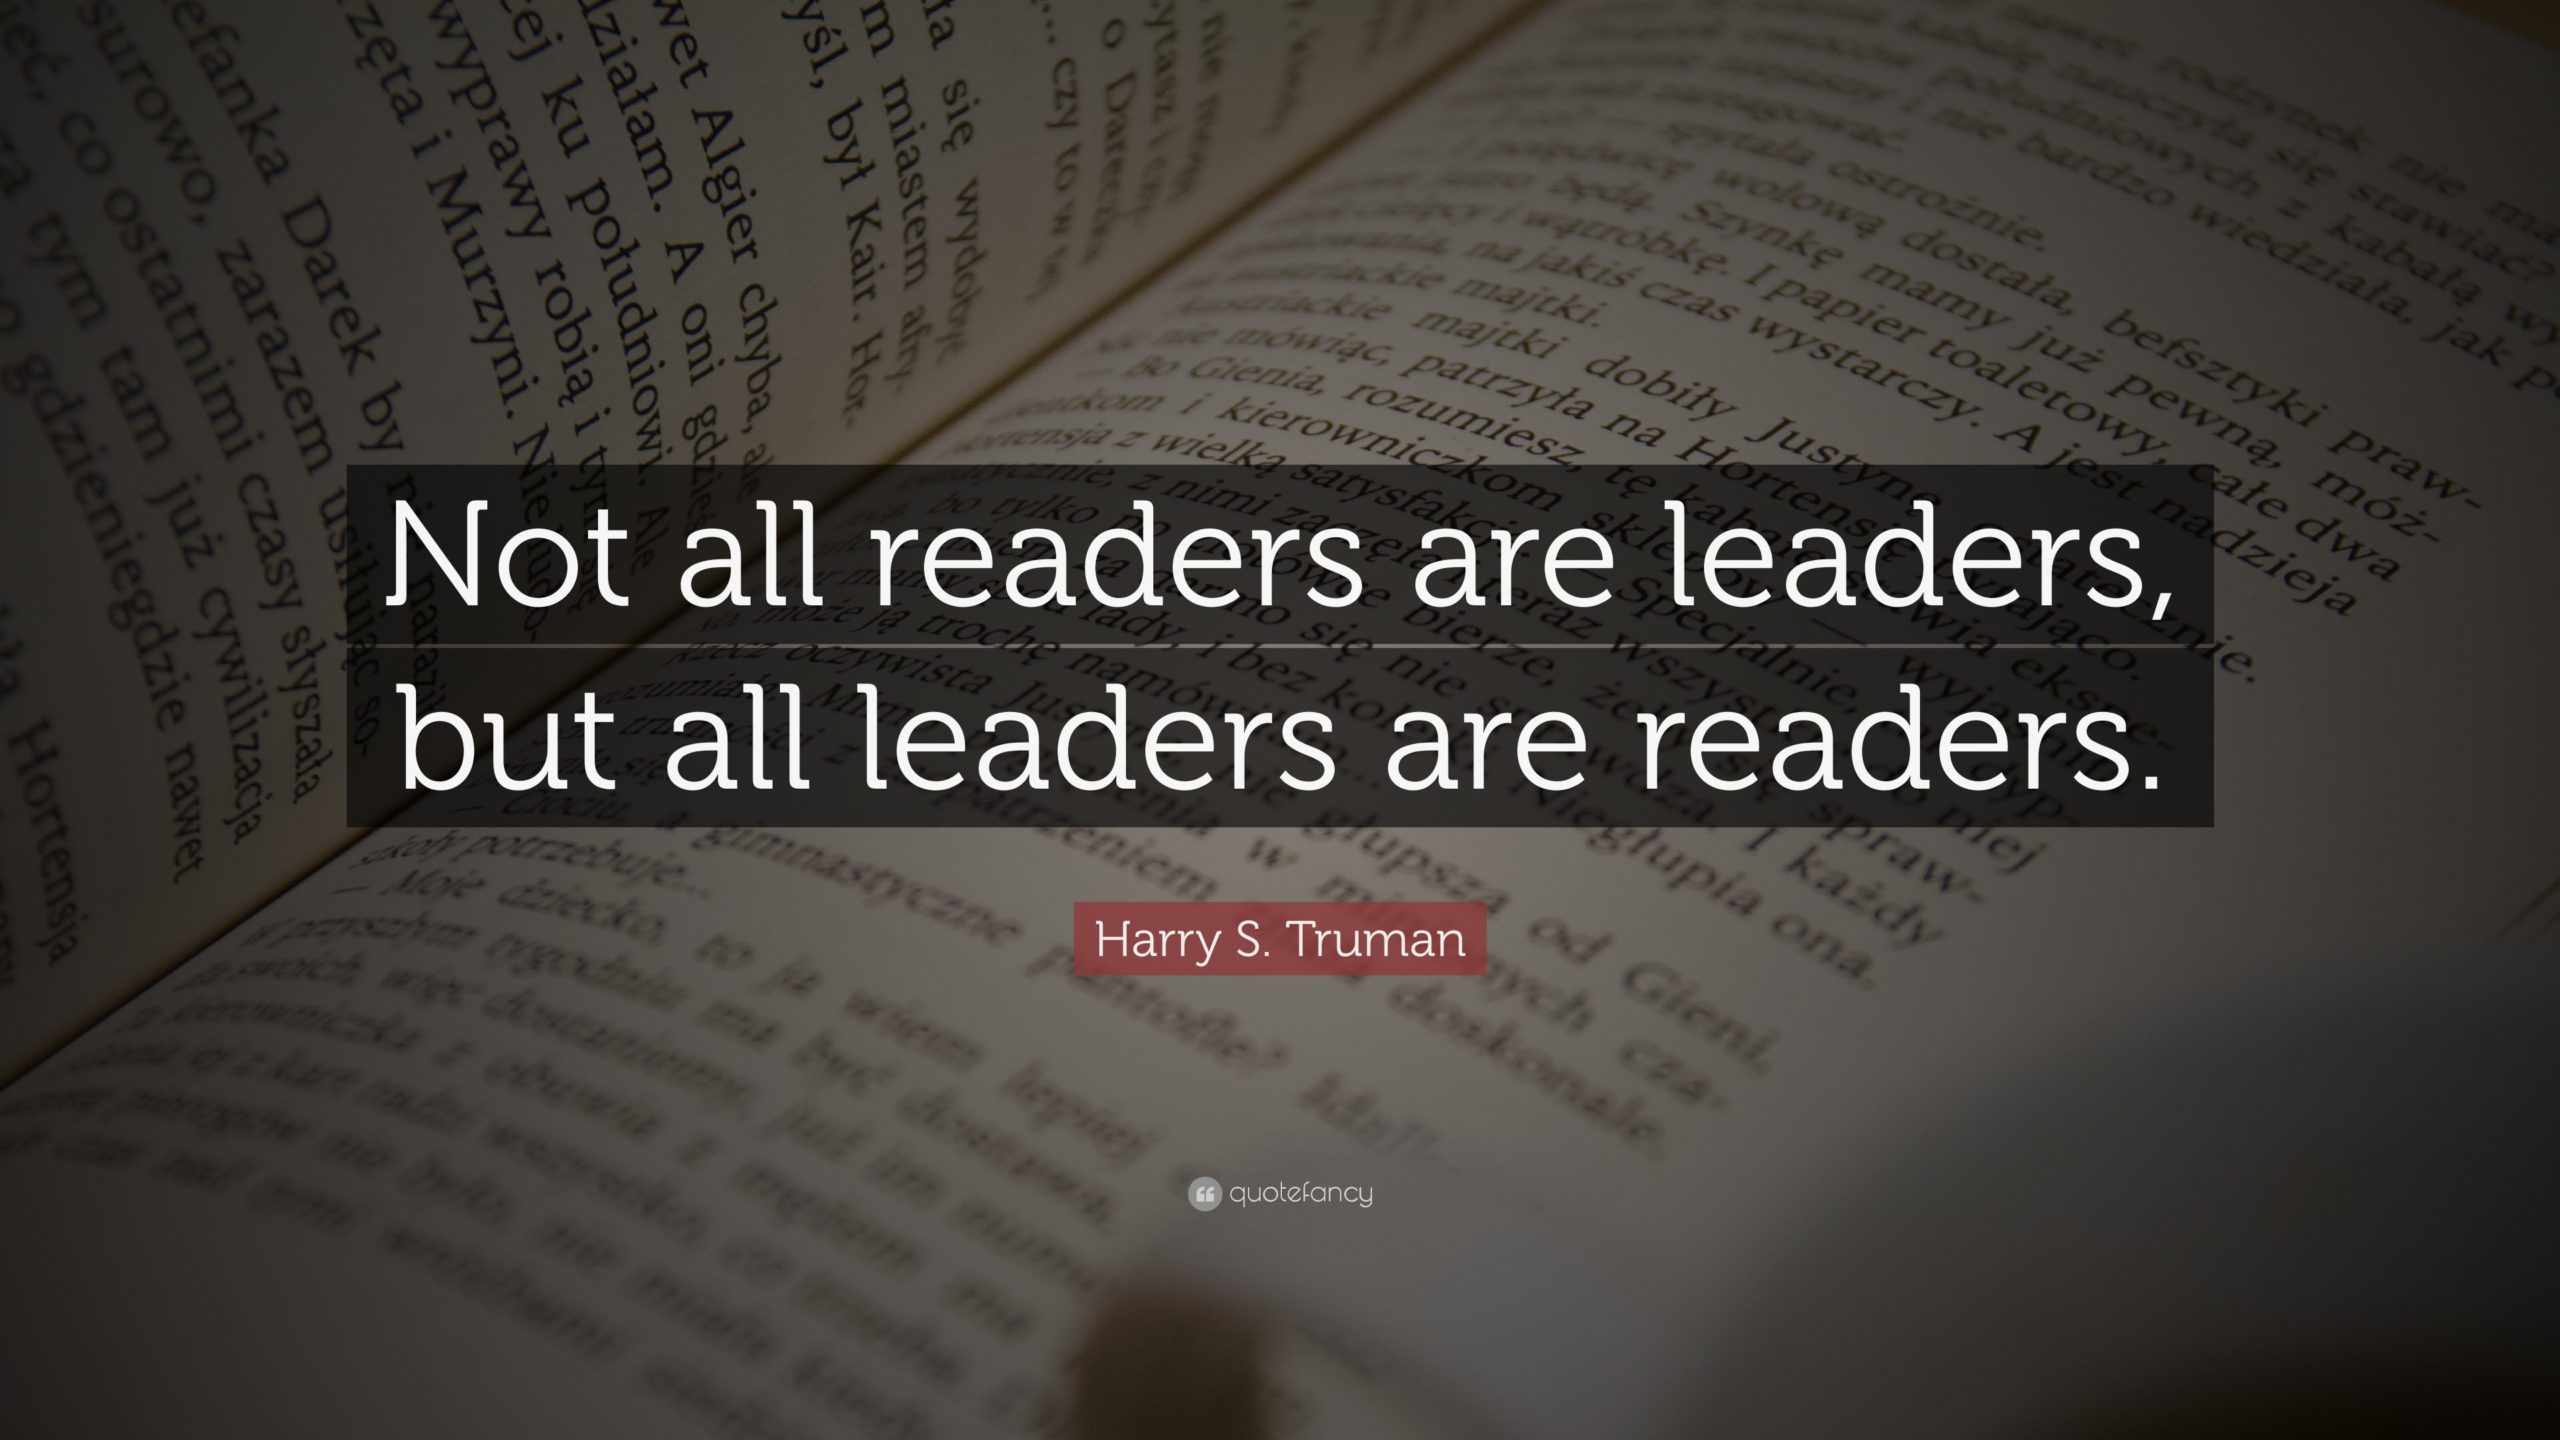 Leaders are readers: Rebuilding the reading habit